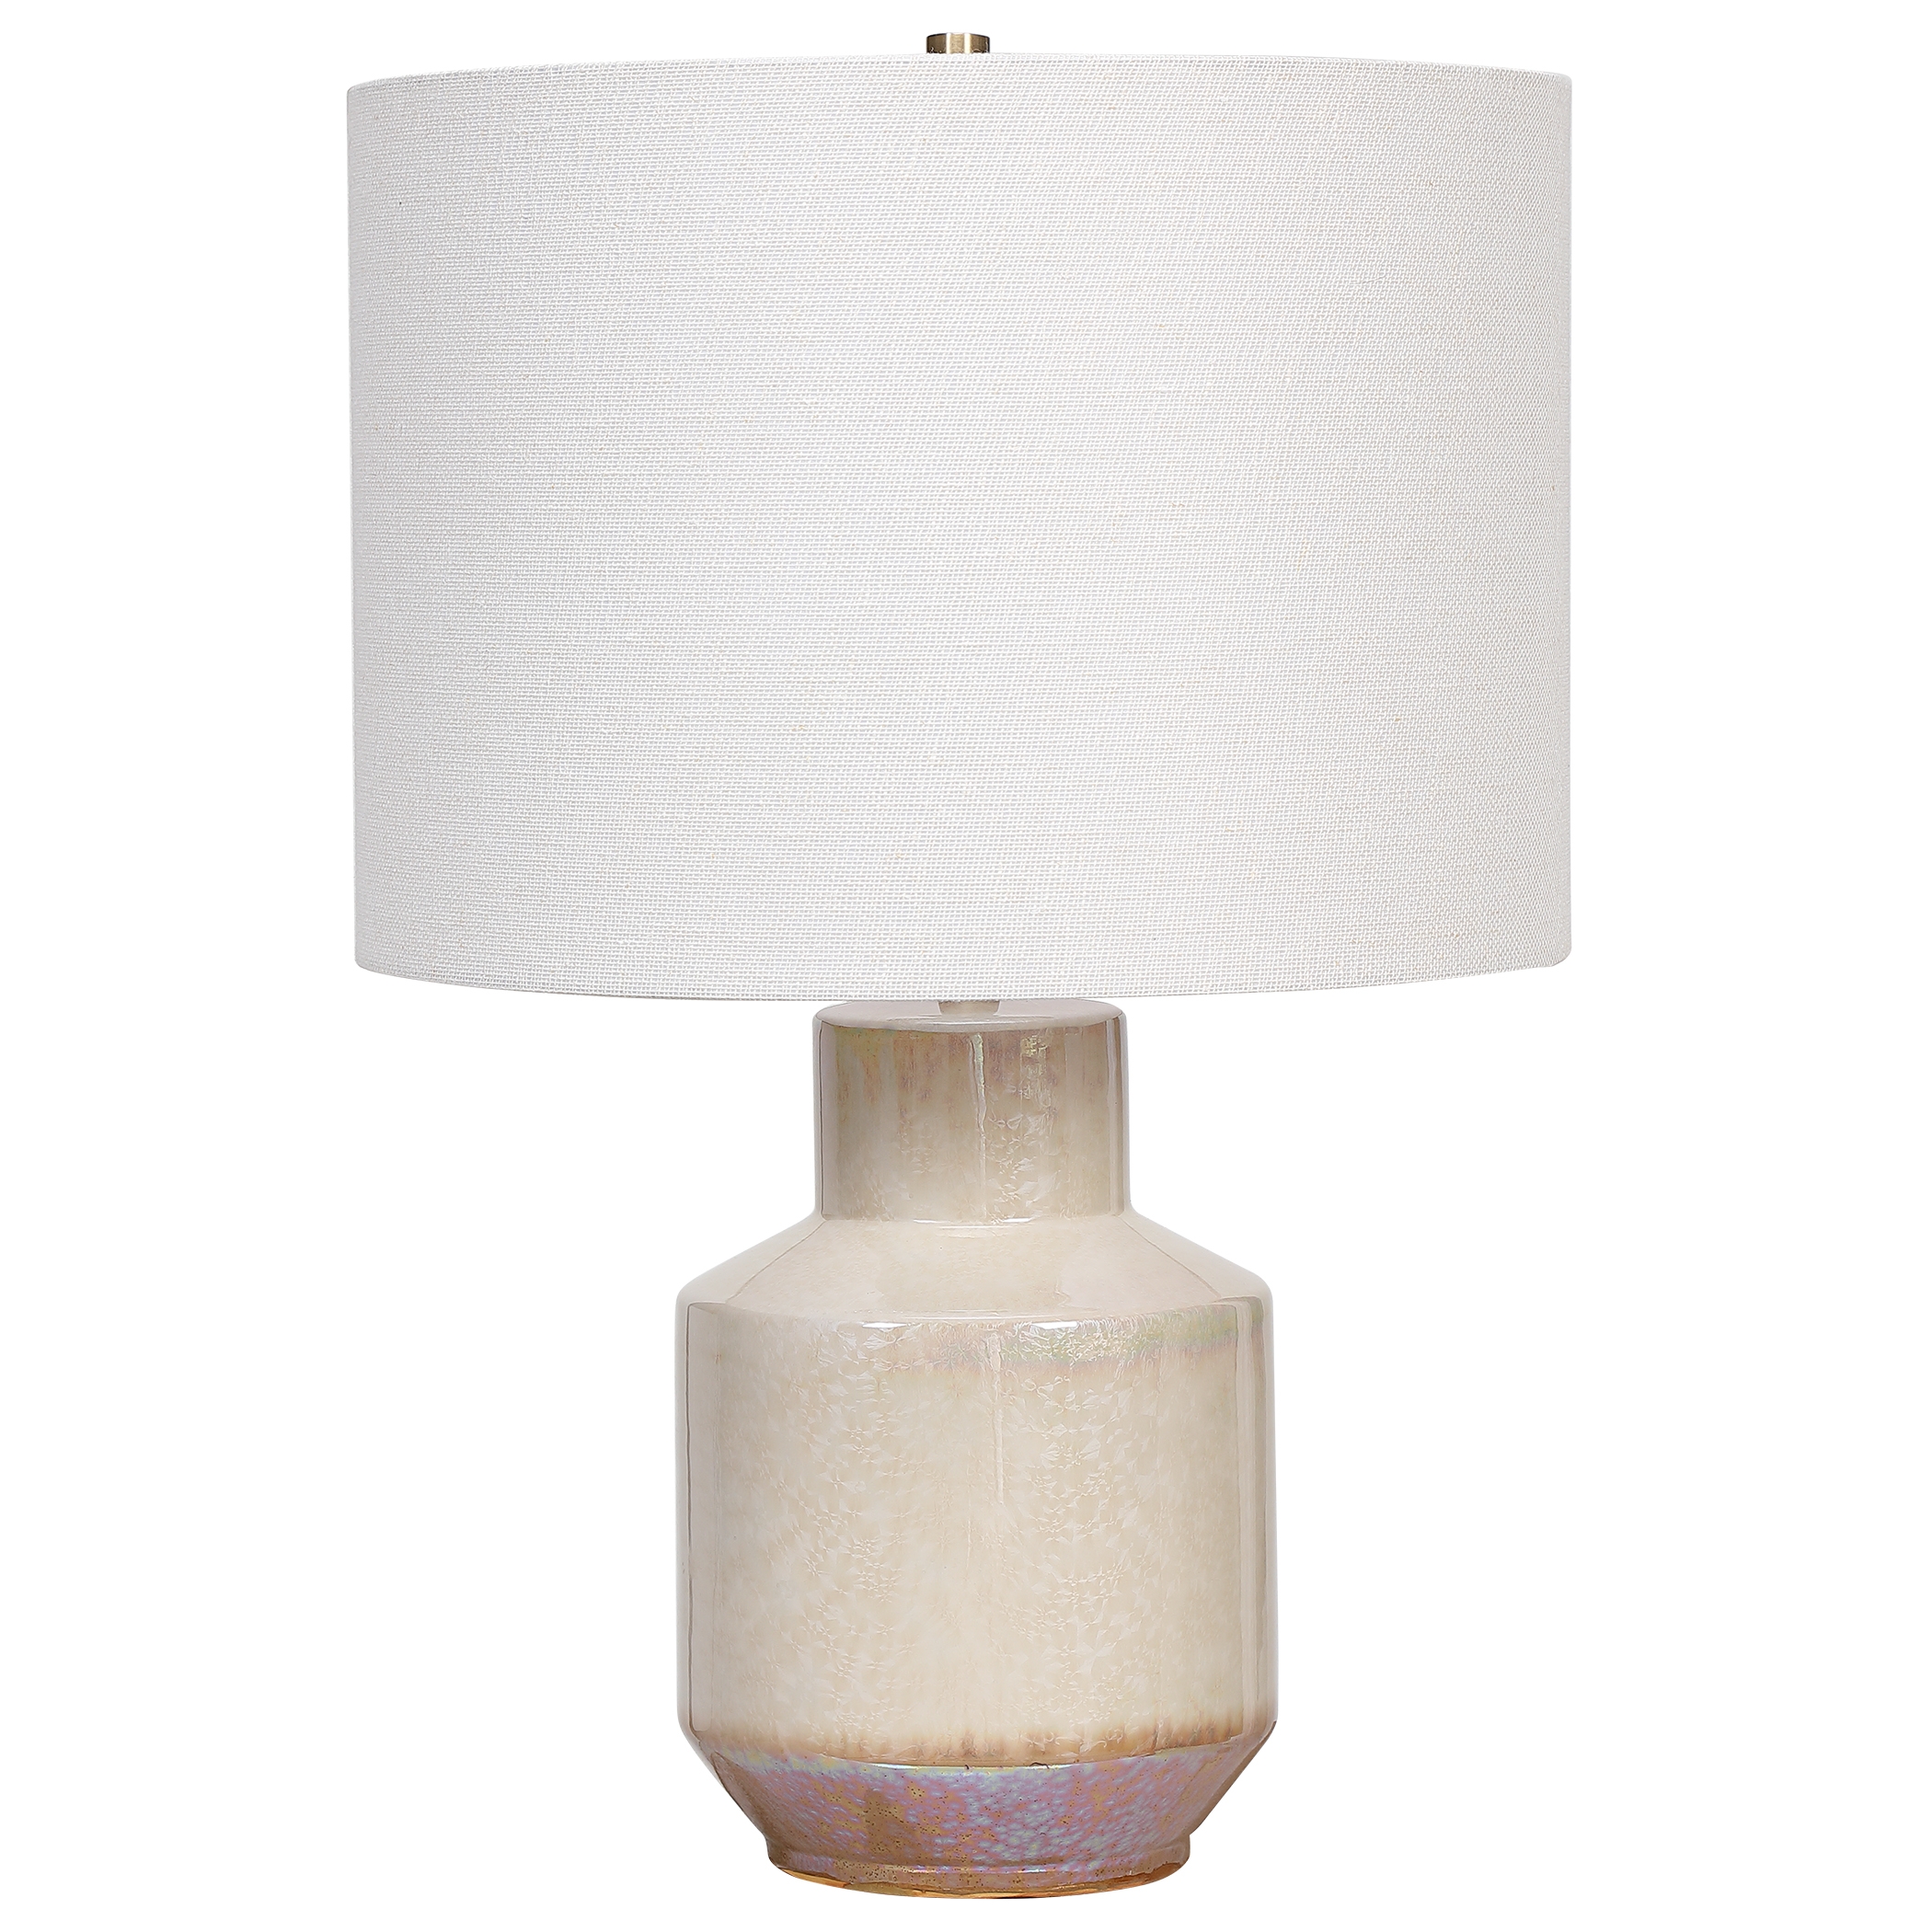 Iridescent Cream Table Lamp - Image 0